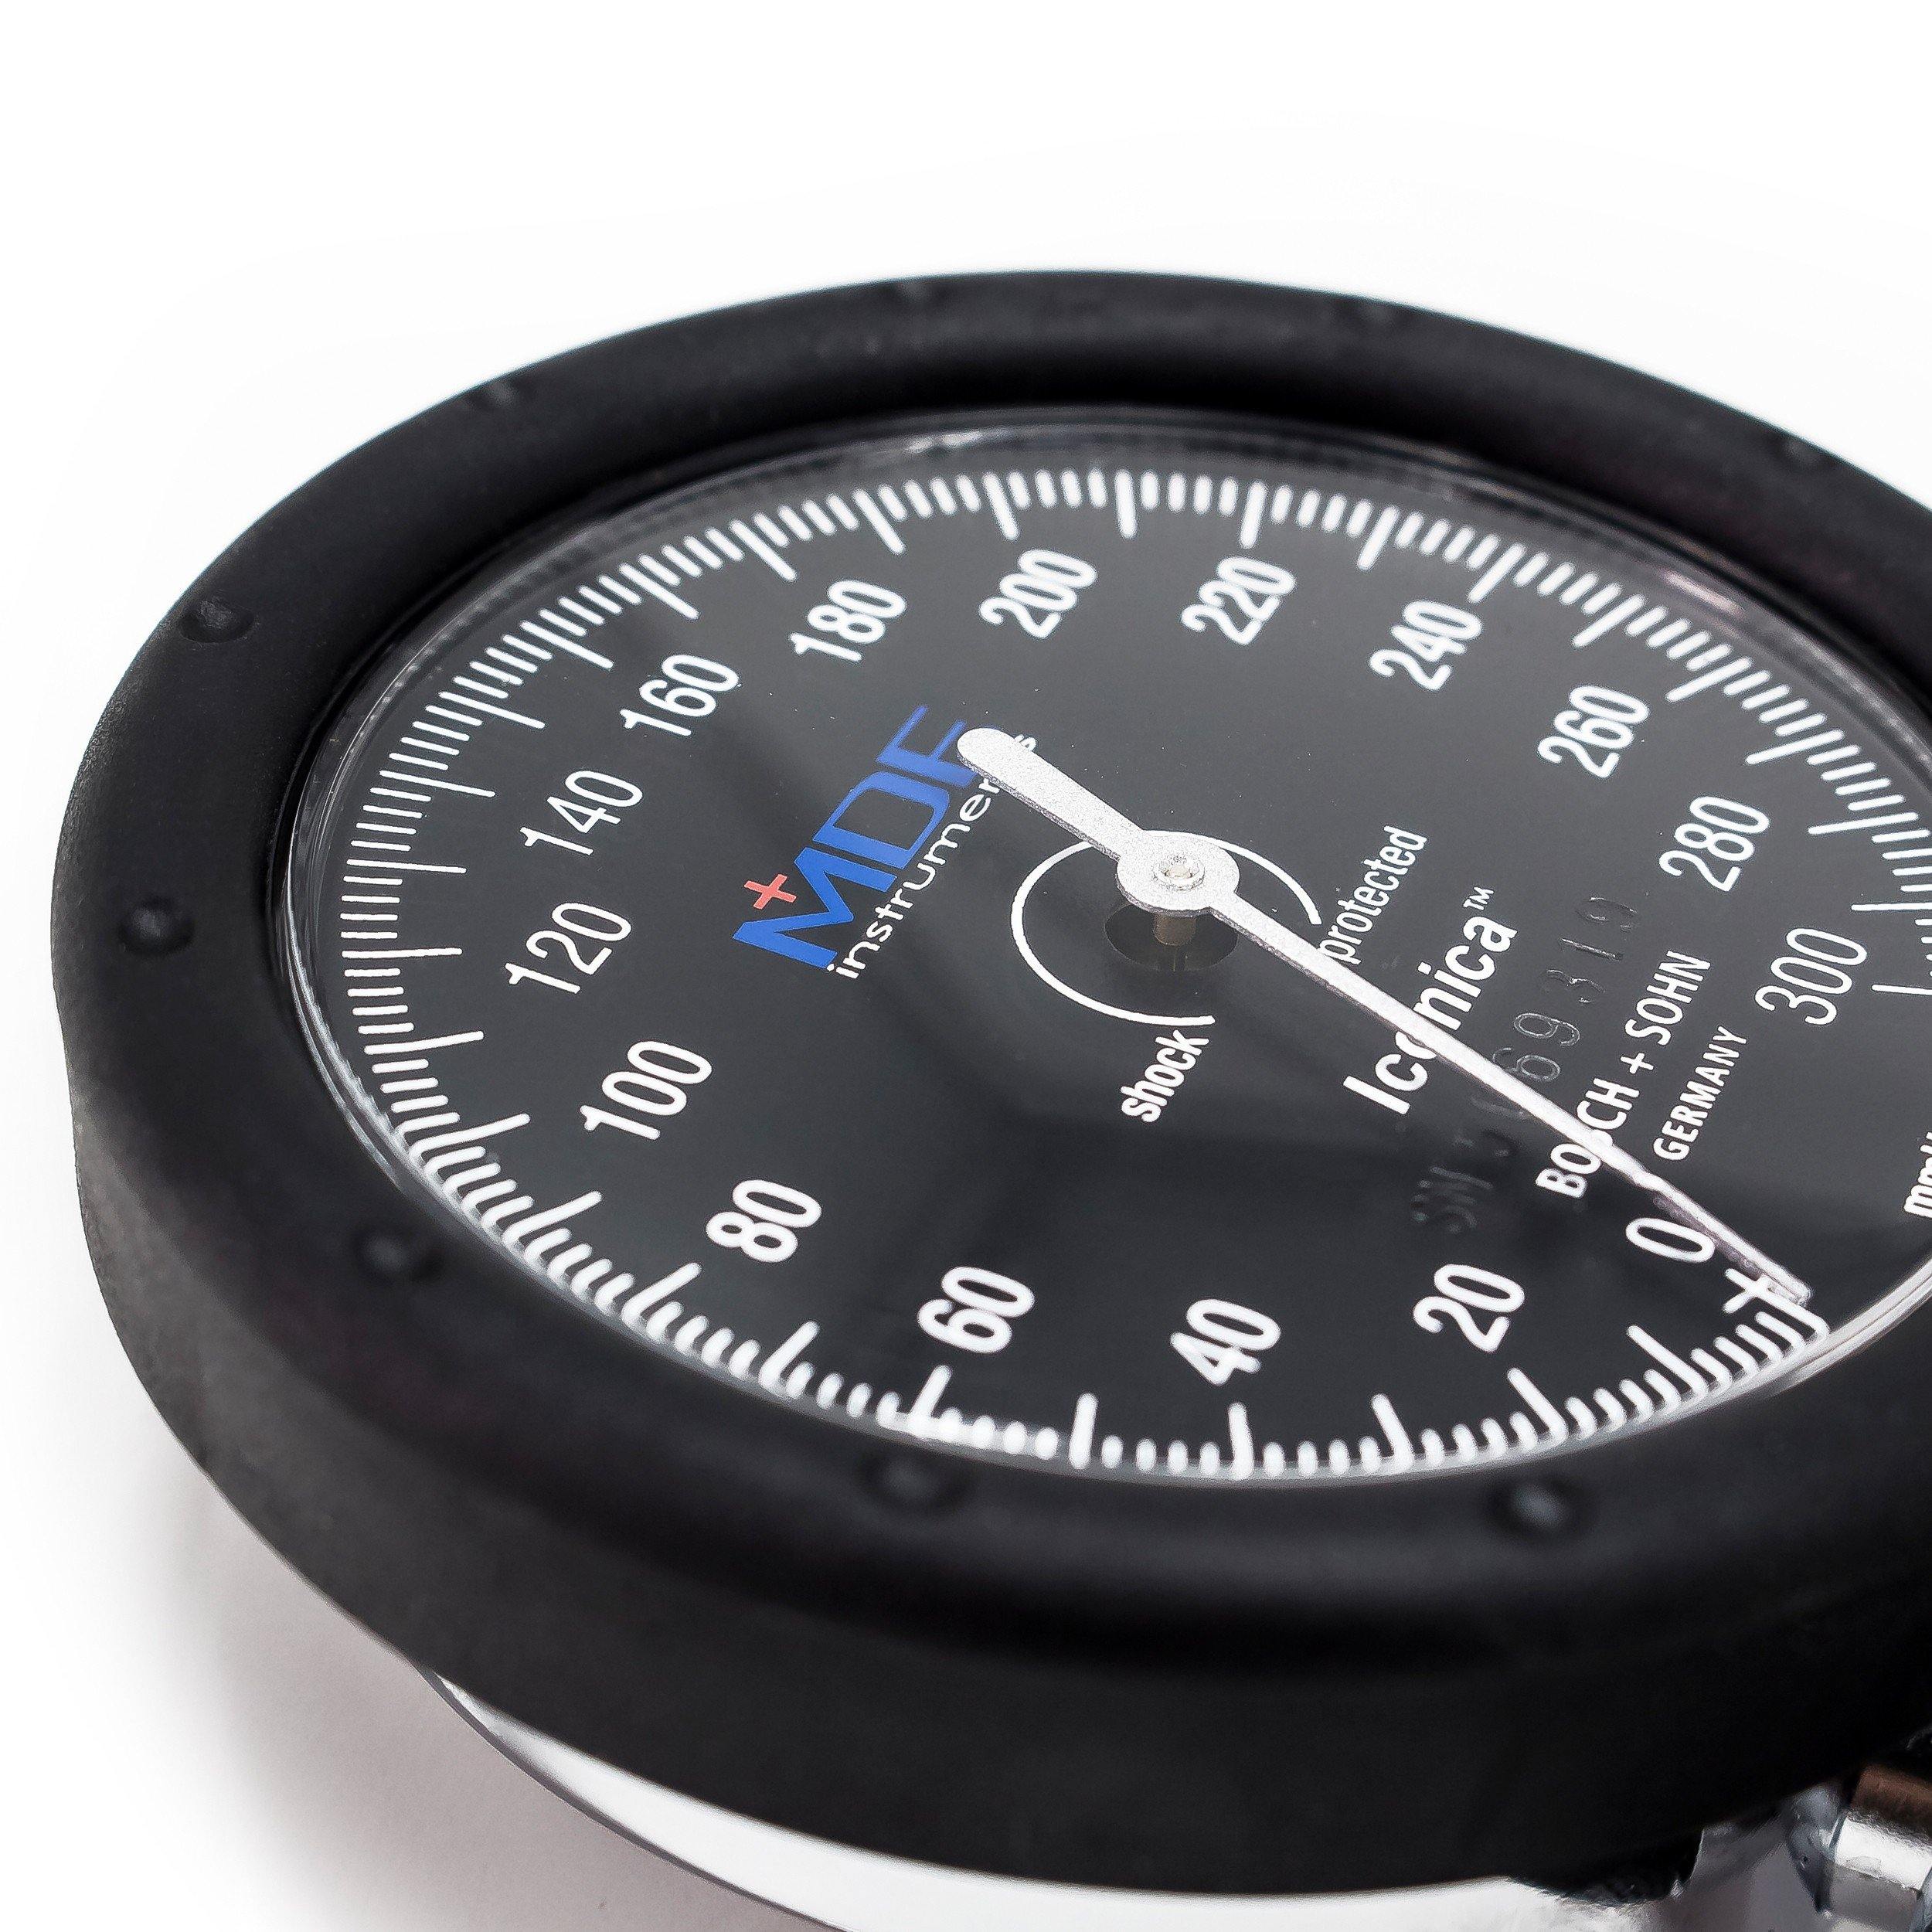 Iconica® Sphygmomanometer MDF Instruments Palm Sphygmomanometers Blood Pressure Monitor Collection